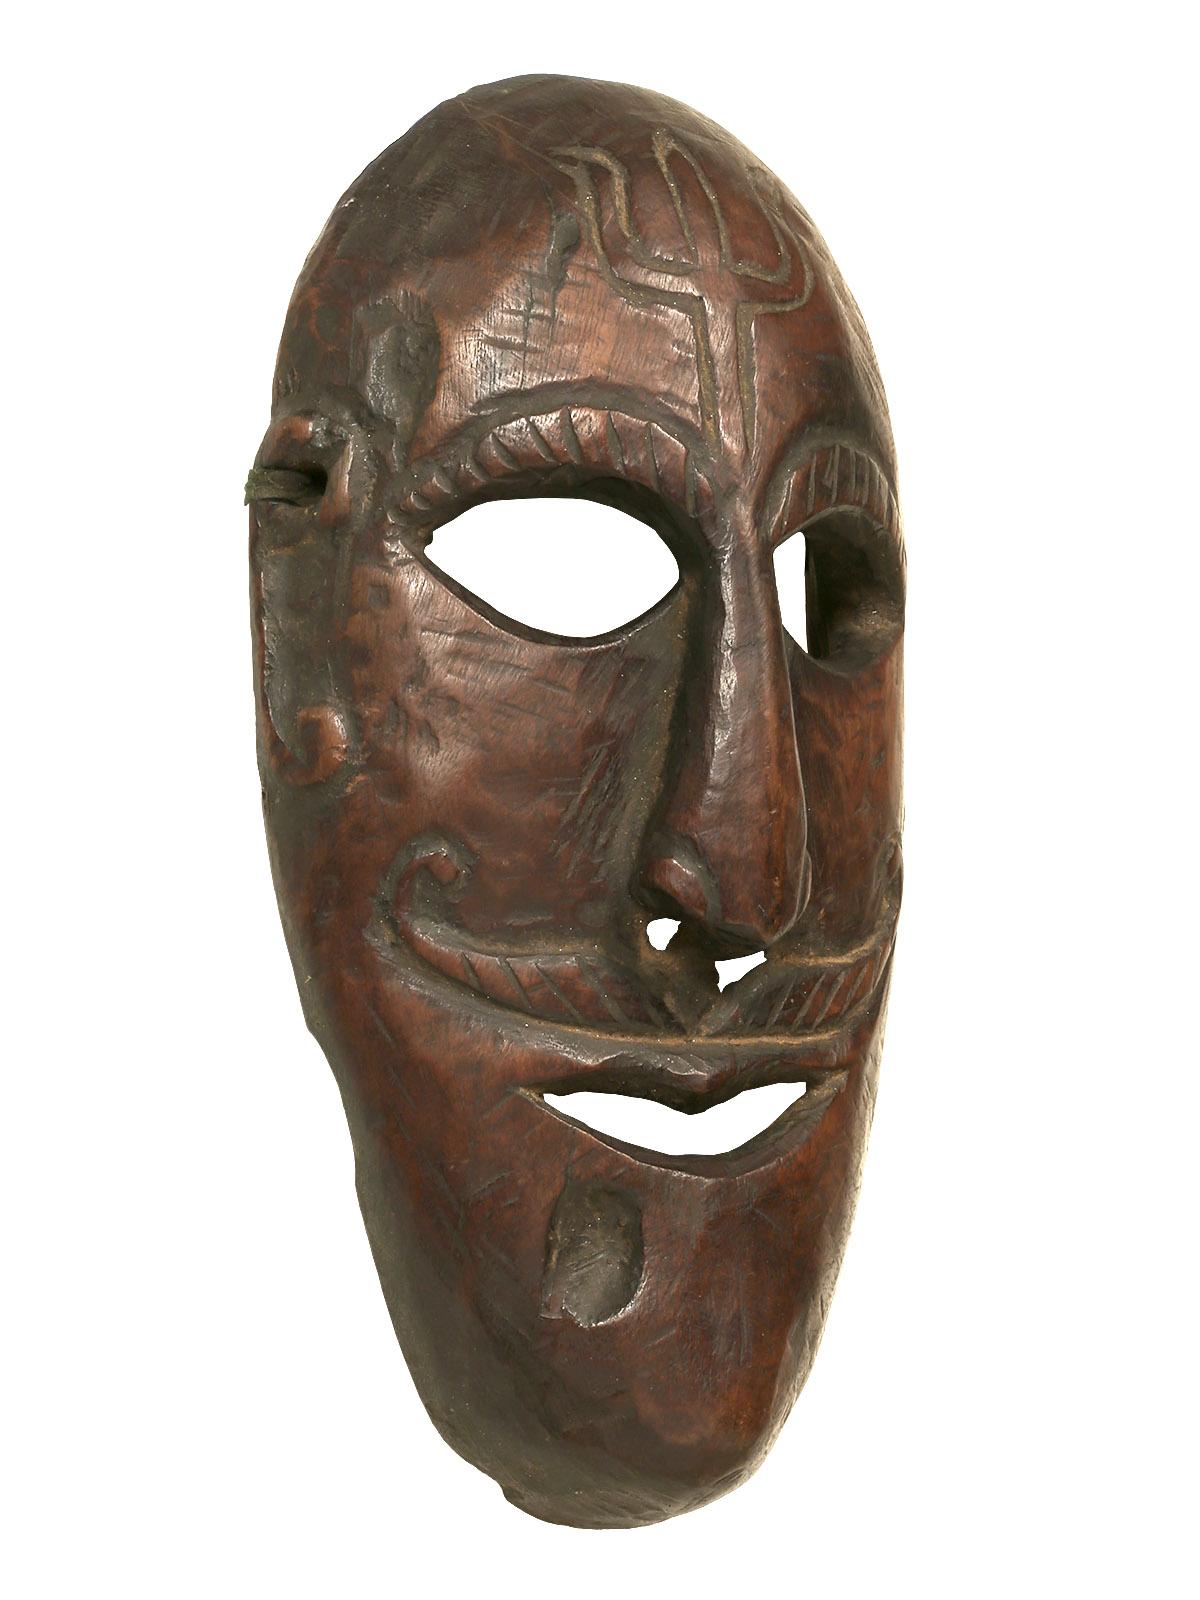 Wooden mask from Karnataka, India, mid-20th century.